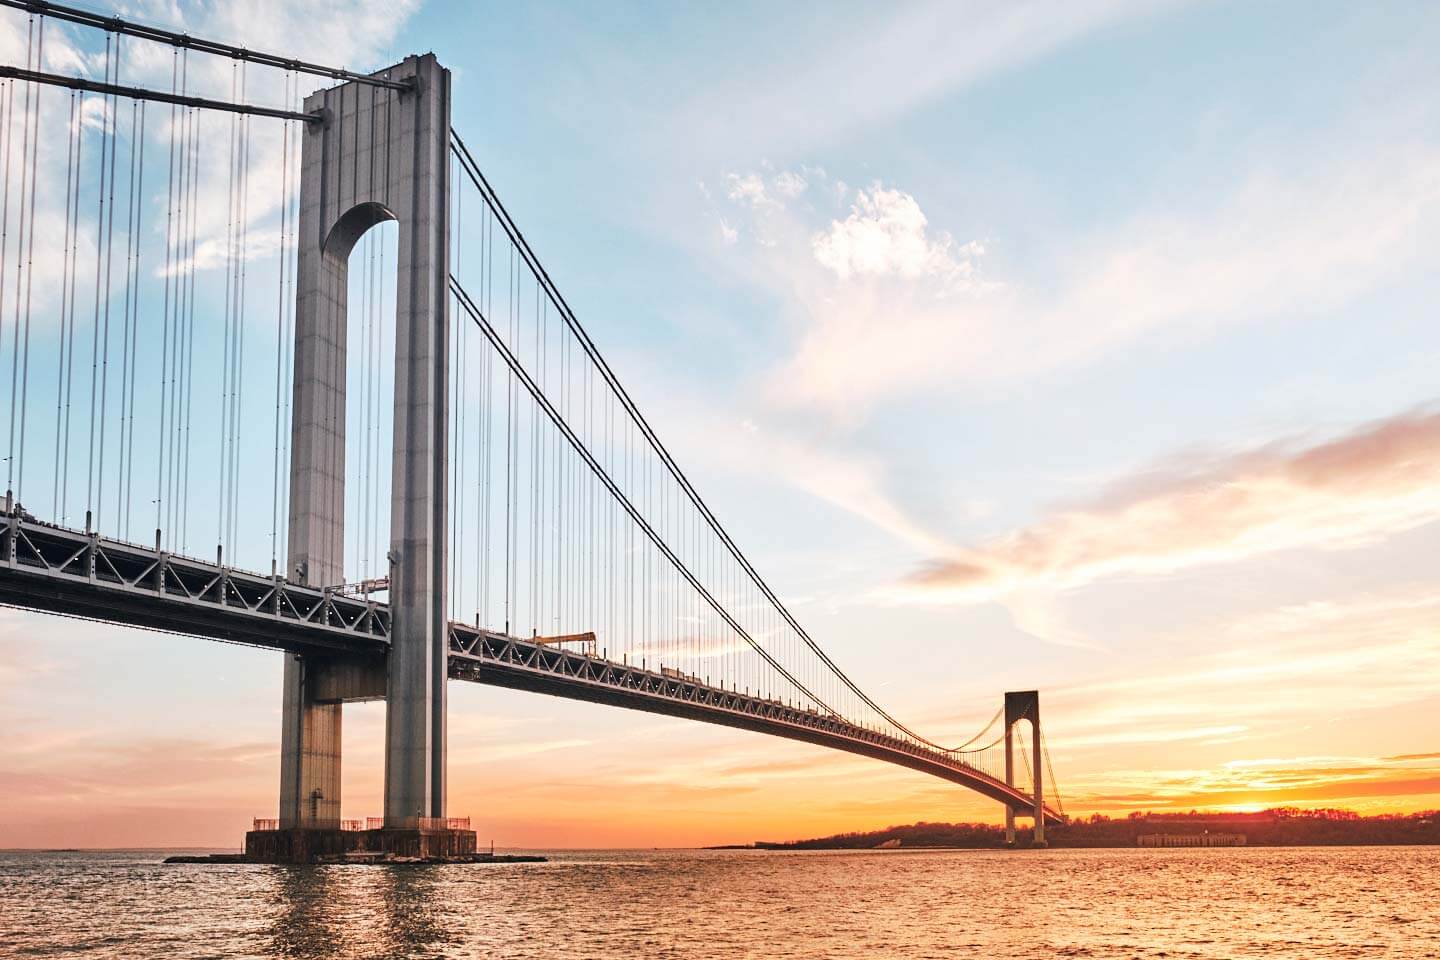 New York Verrazano Bridge Travel Photographer Marcus Lewis web-40-percent-tinypng